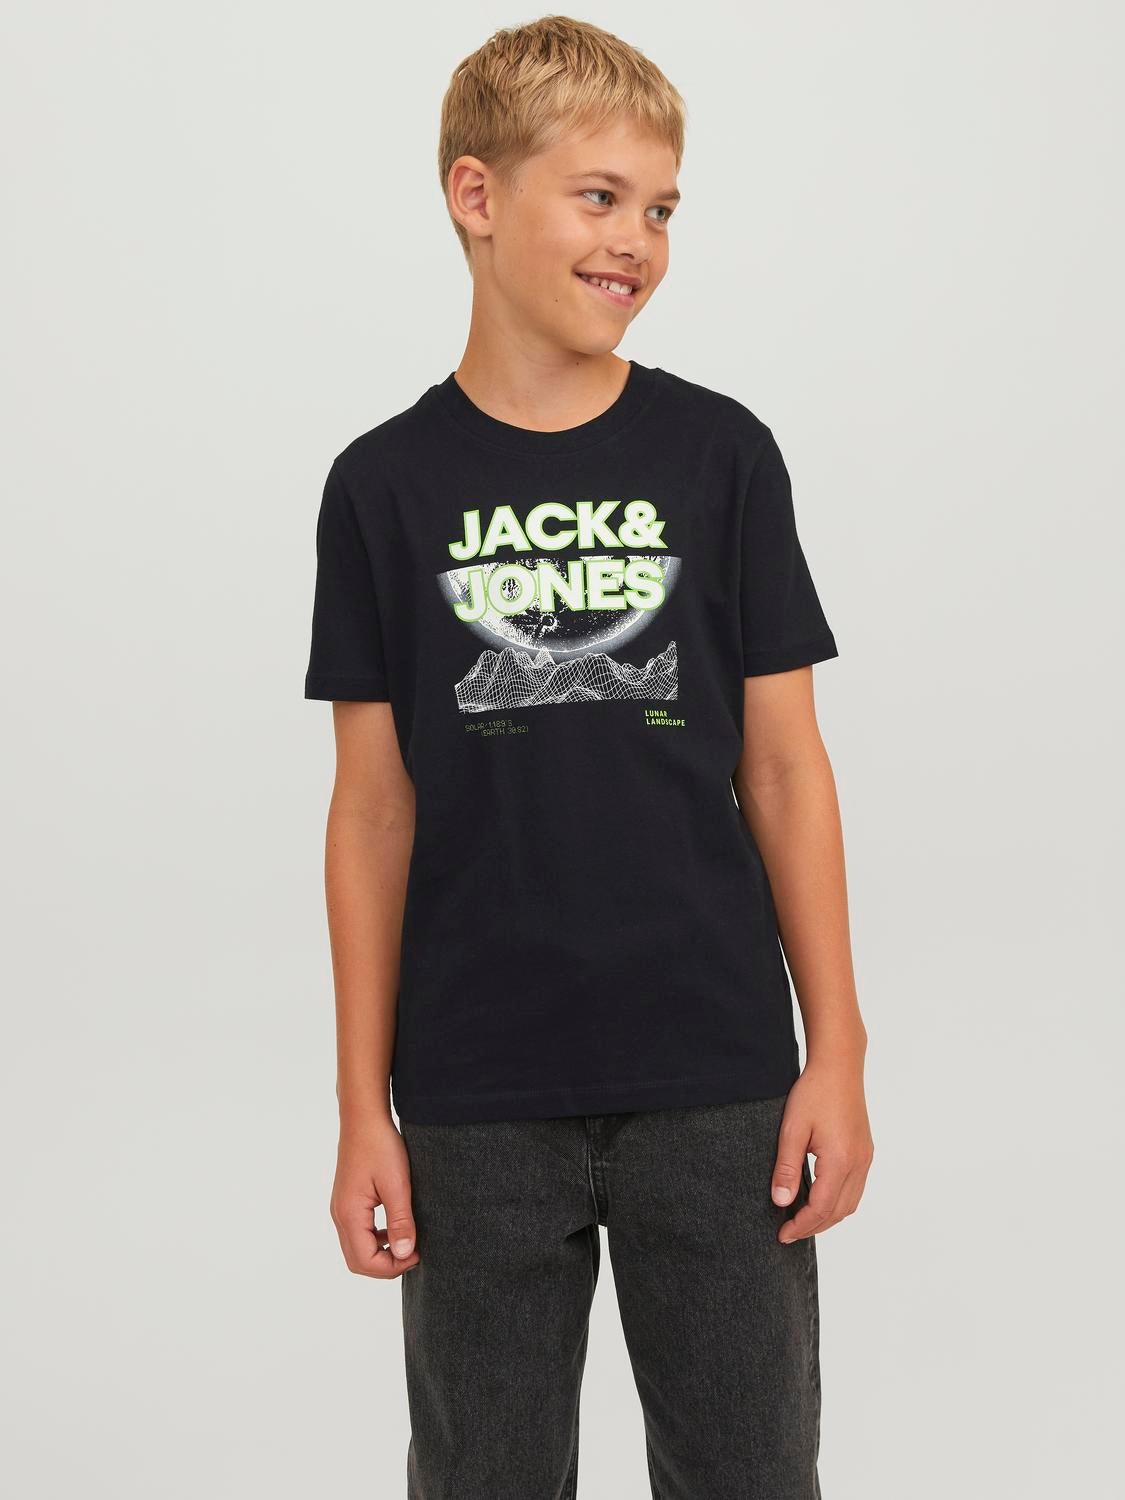 Jack & Jones 2er-pack Logo T-shirt Für jungs -Black - 12249848